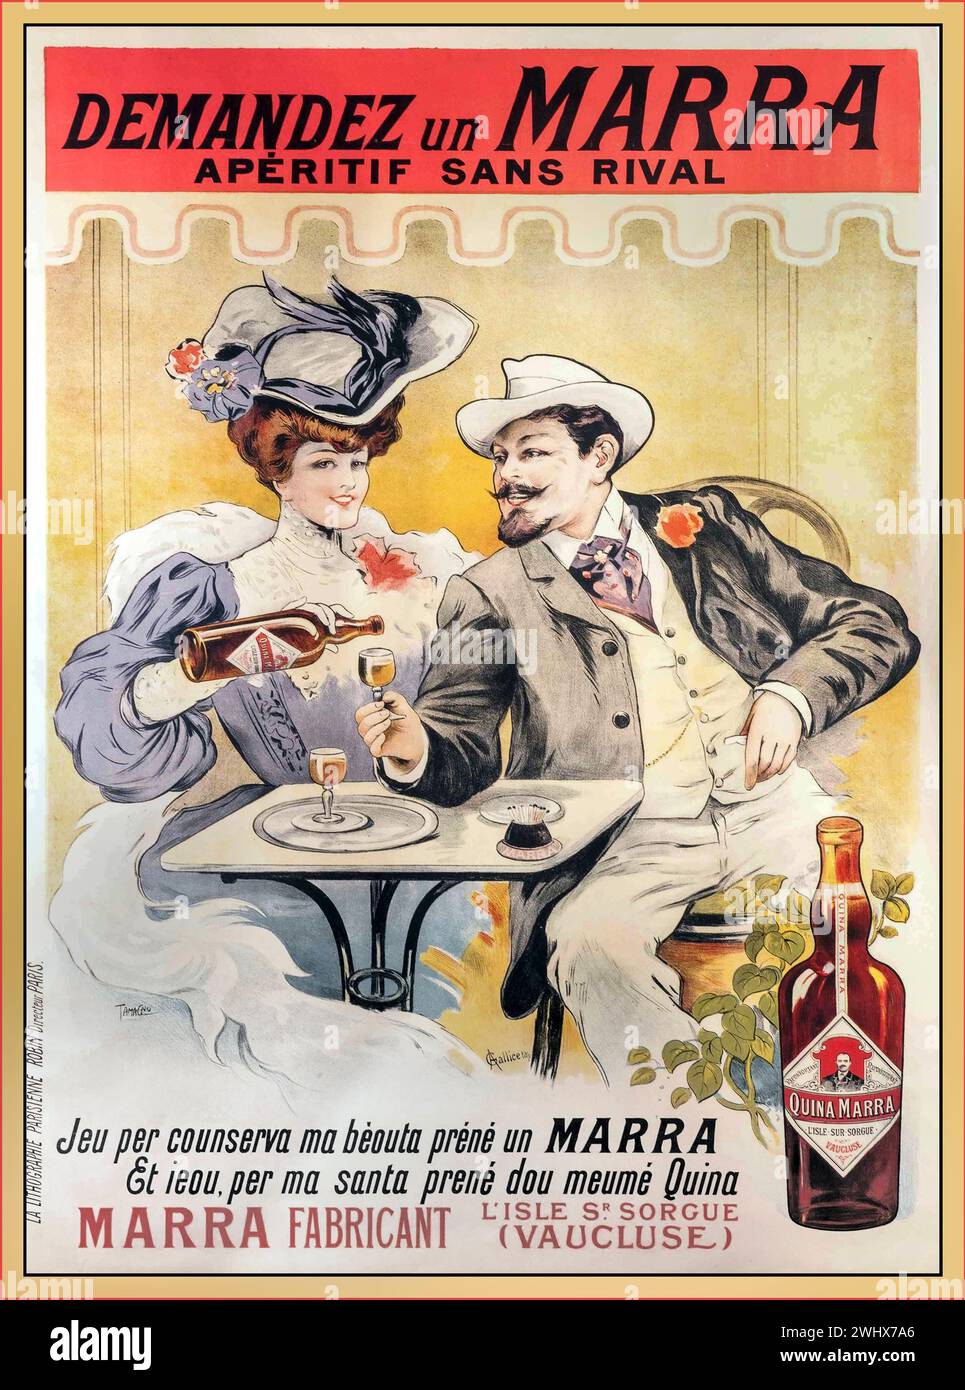 Poster "Demandez un Marra aperitif sans rival", bevande alcoliche vintage. 1905 aperitivo francese "QUINA MARRA" Vaucluse l'Isle Sr. Sorgue France Foto Stock